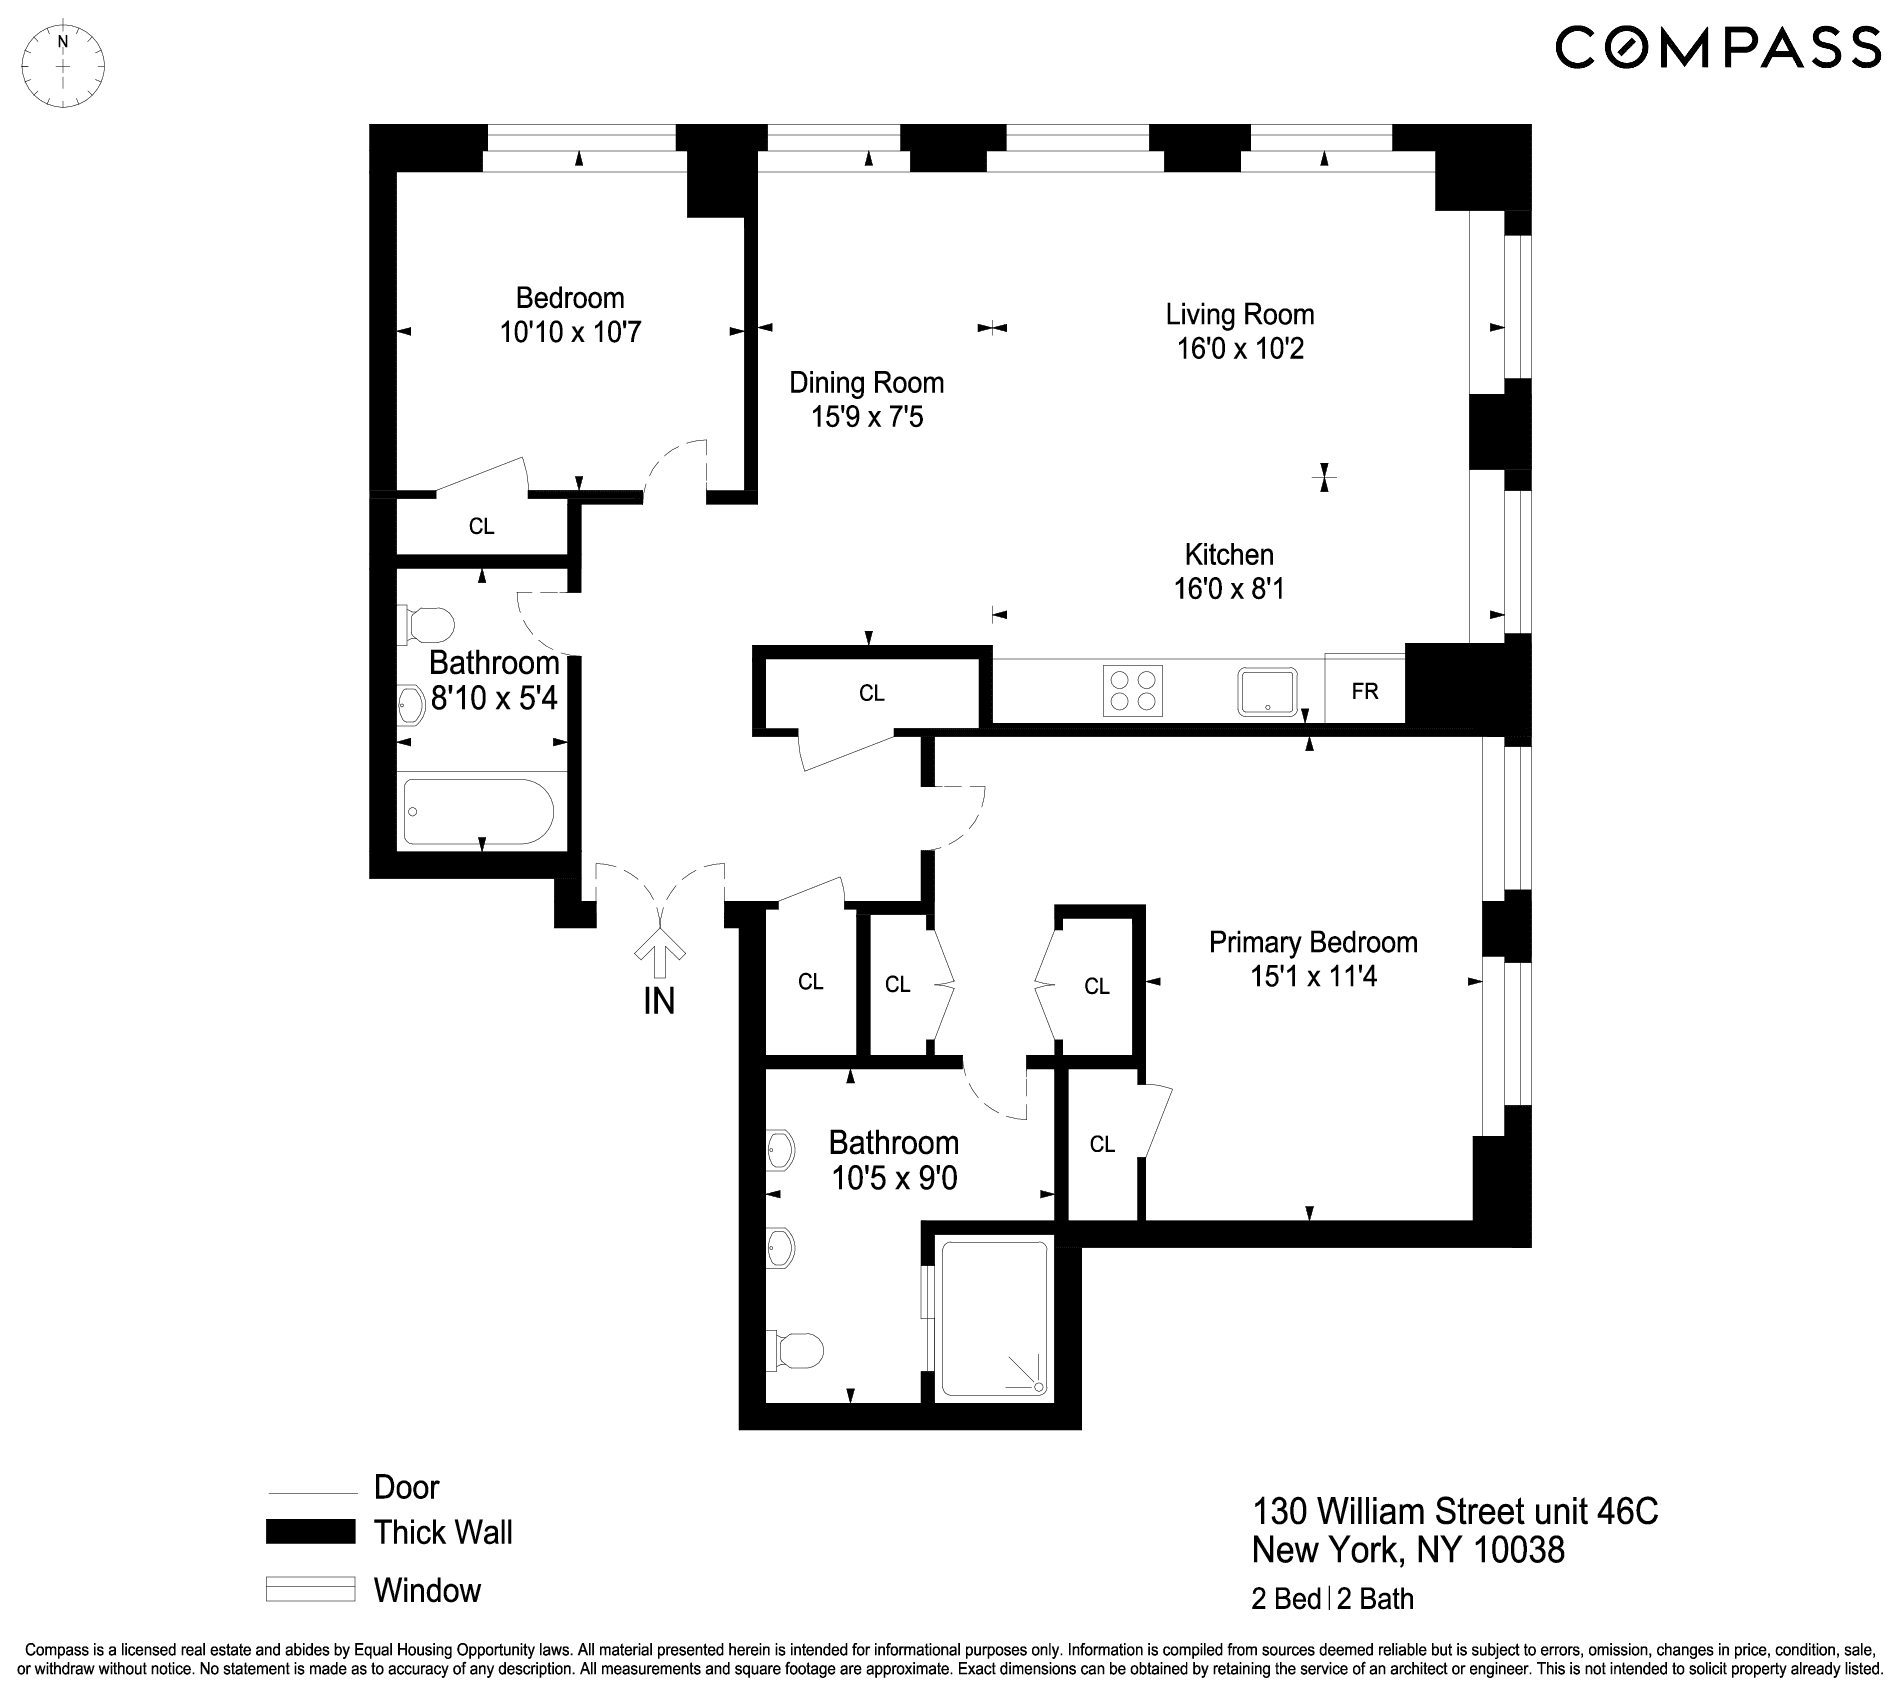 Floorplan for 130 William Street, 46C